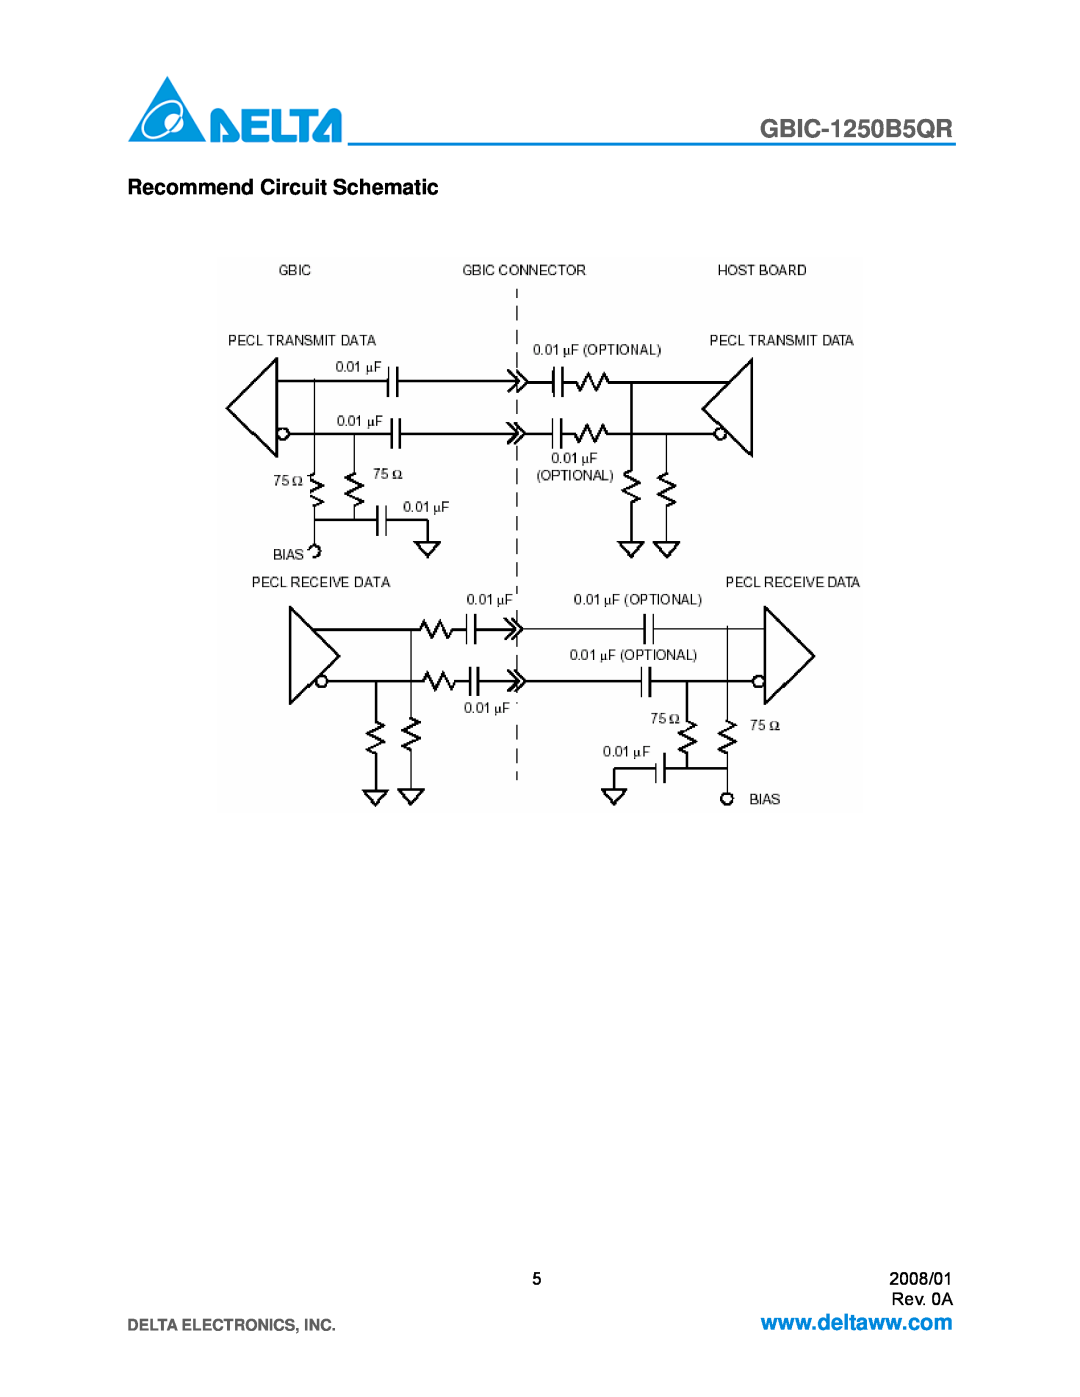 Delta Electronics GBIC-1250B5QR specifications Recommend Circuit Schematic, Delta Electronics, Inc 